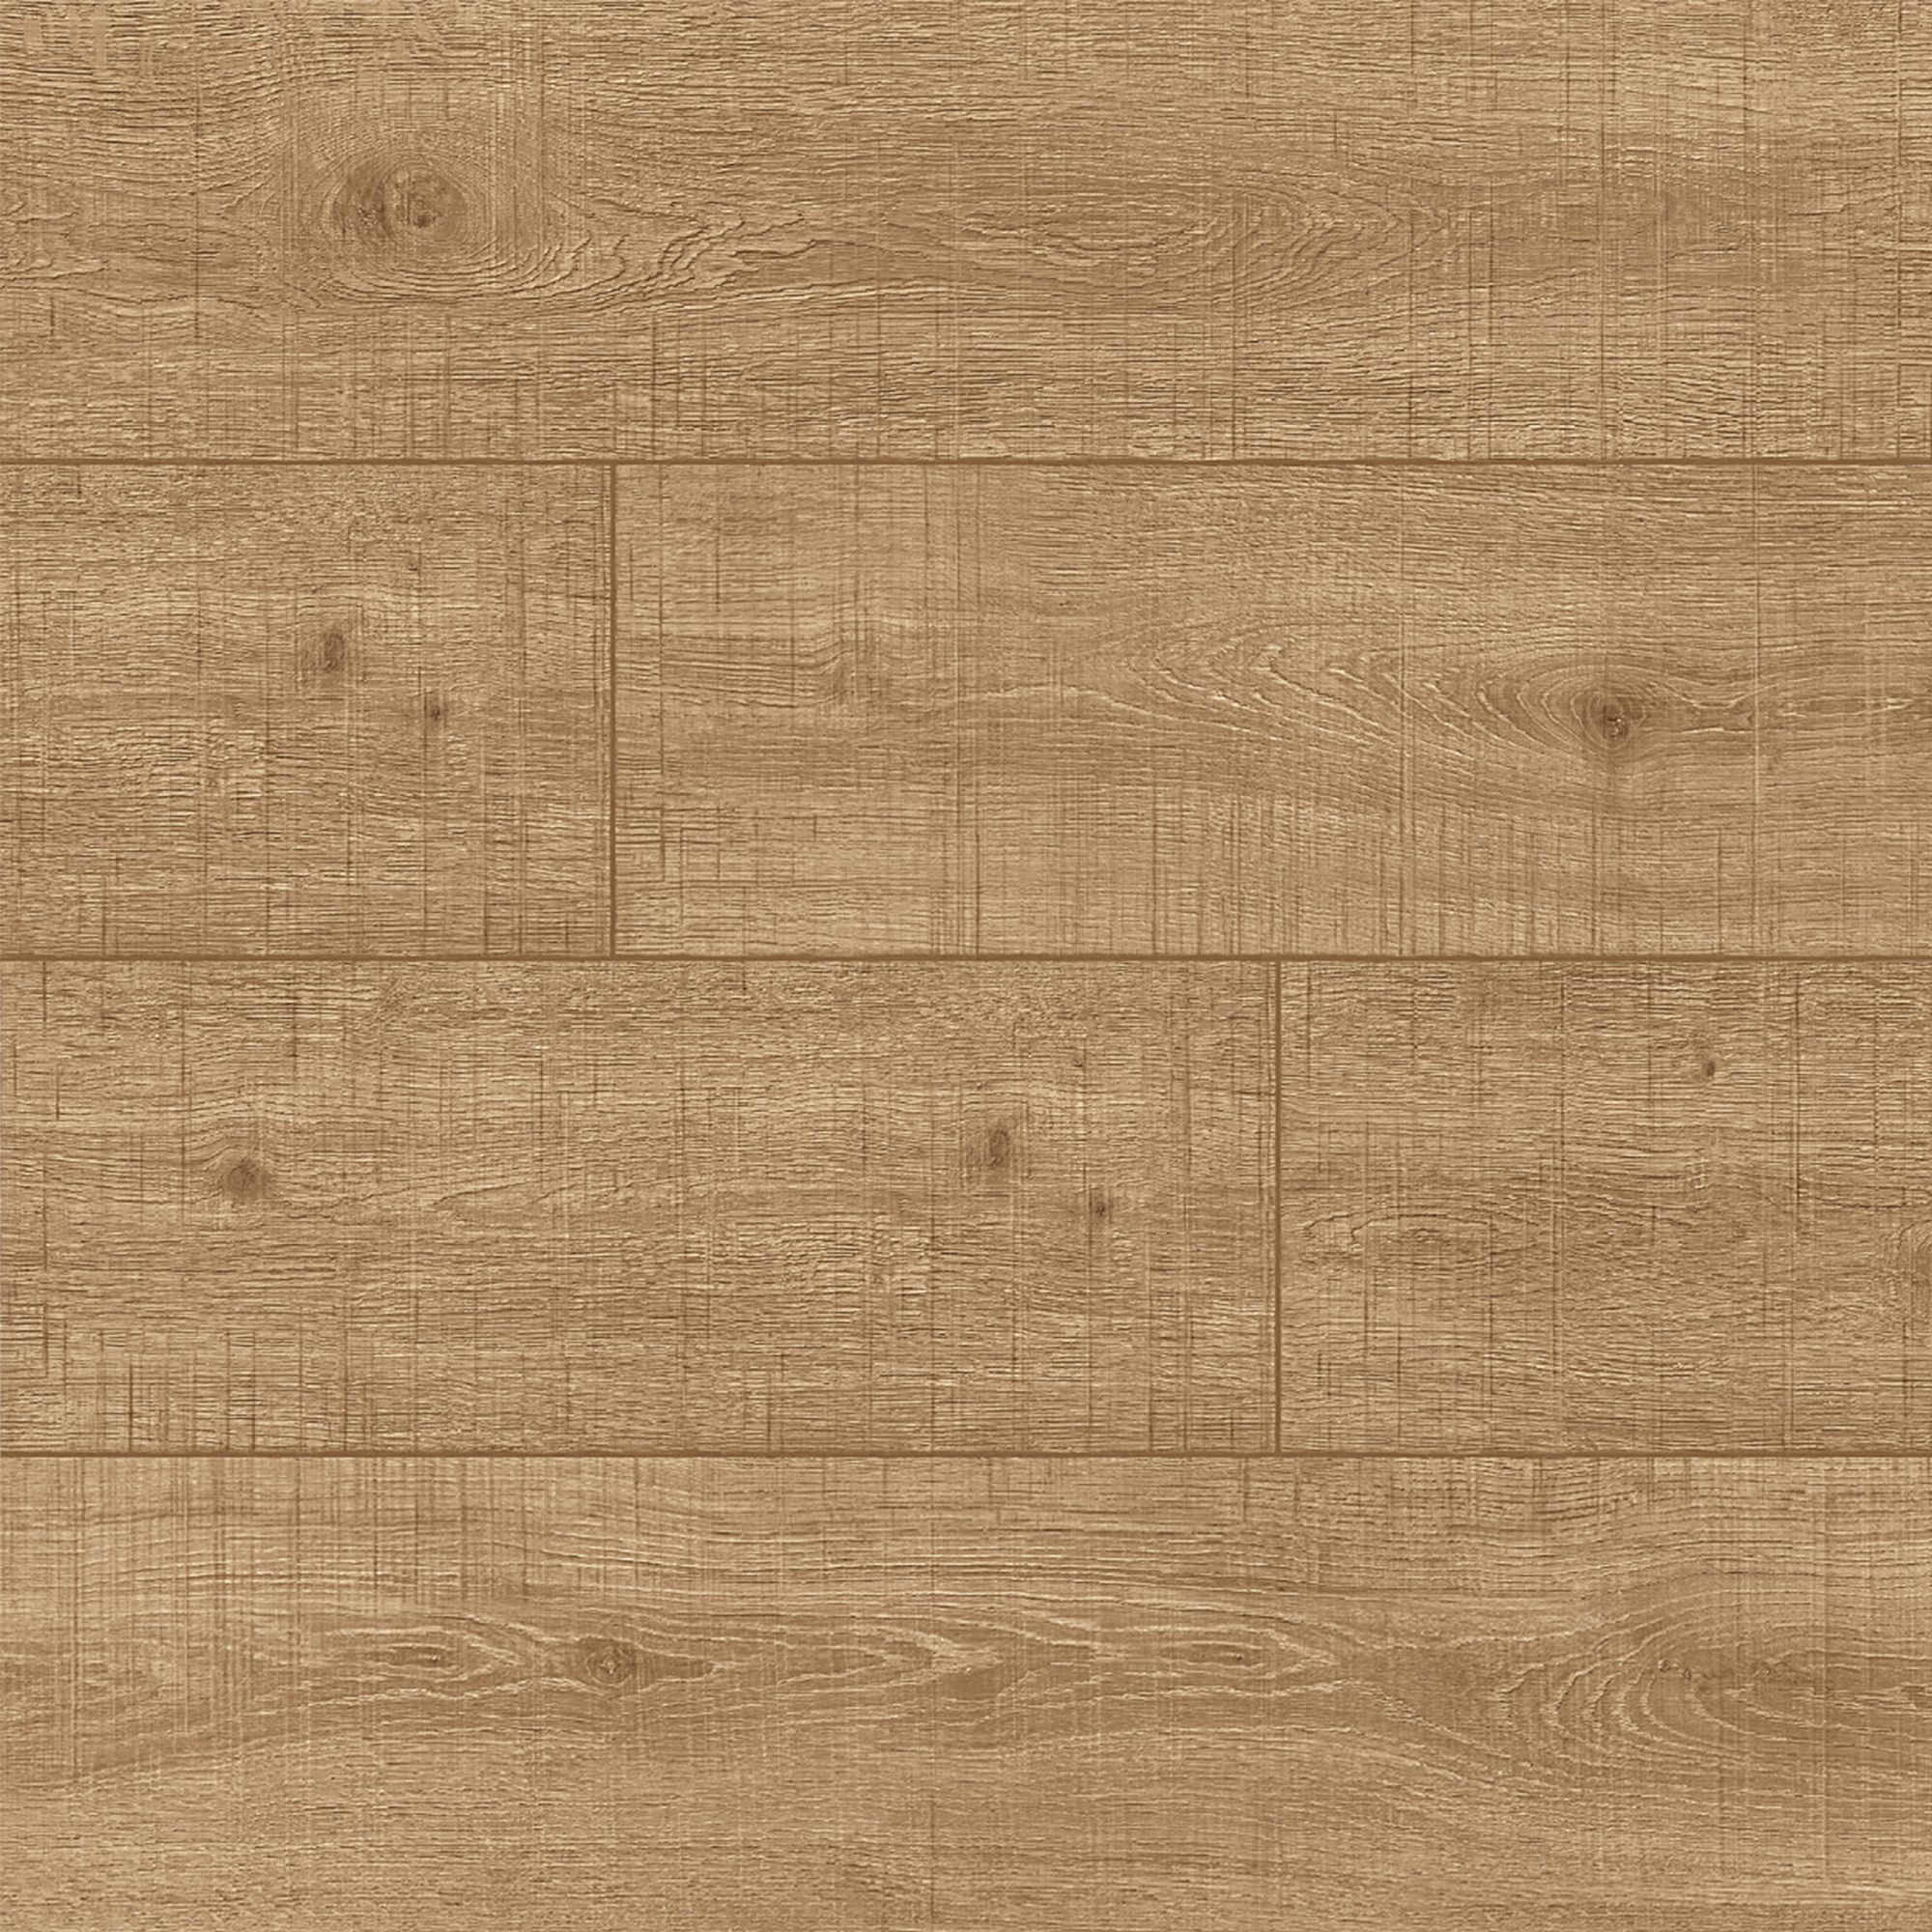 GoodHome Maldon XL Wide Dark Oak Natural Oak effect Laminate flooring Sample